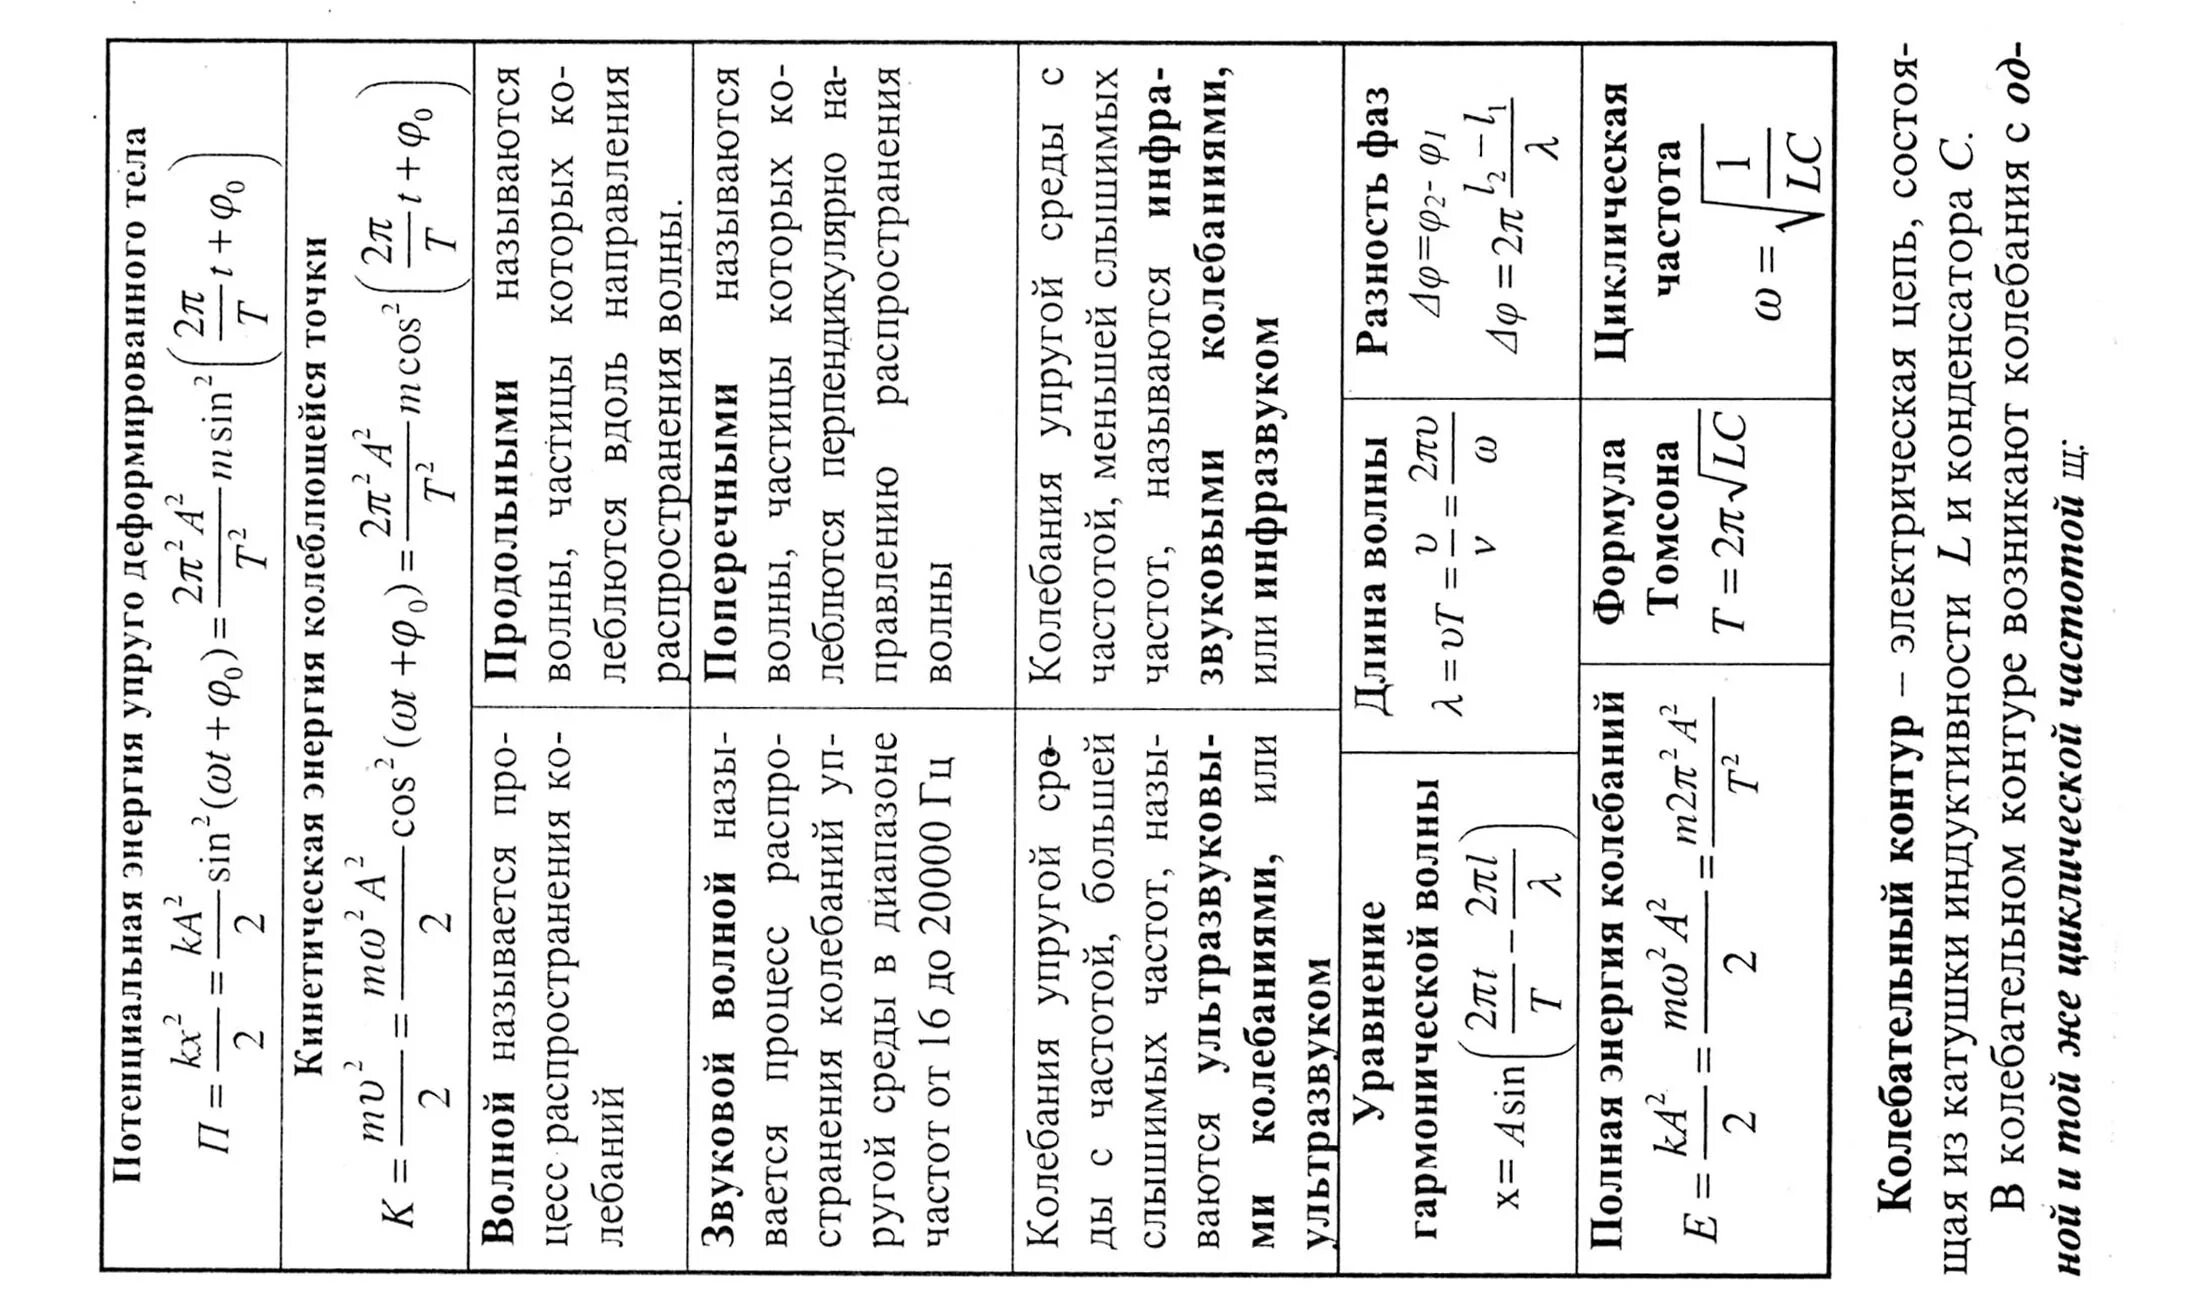 Впр по физике 11 класс формулы. Формулы по физике для ОГЭ 9 класс шпаргалка. Шпаргалка по физике 11 класс формулы ЕГЭ. Формулы физика 11 класс шпаргалка. Шпора по физике ЕГЭ формулы.